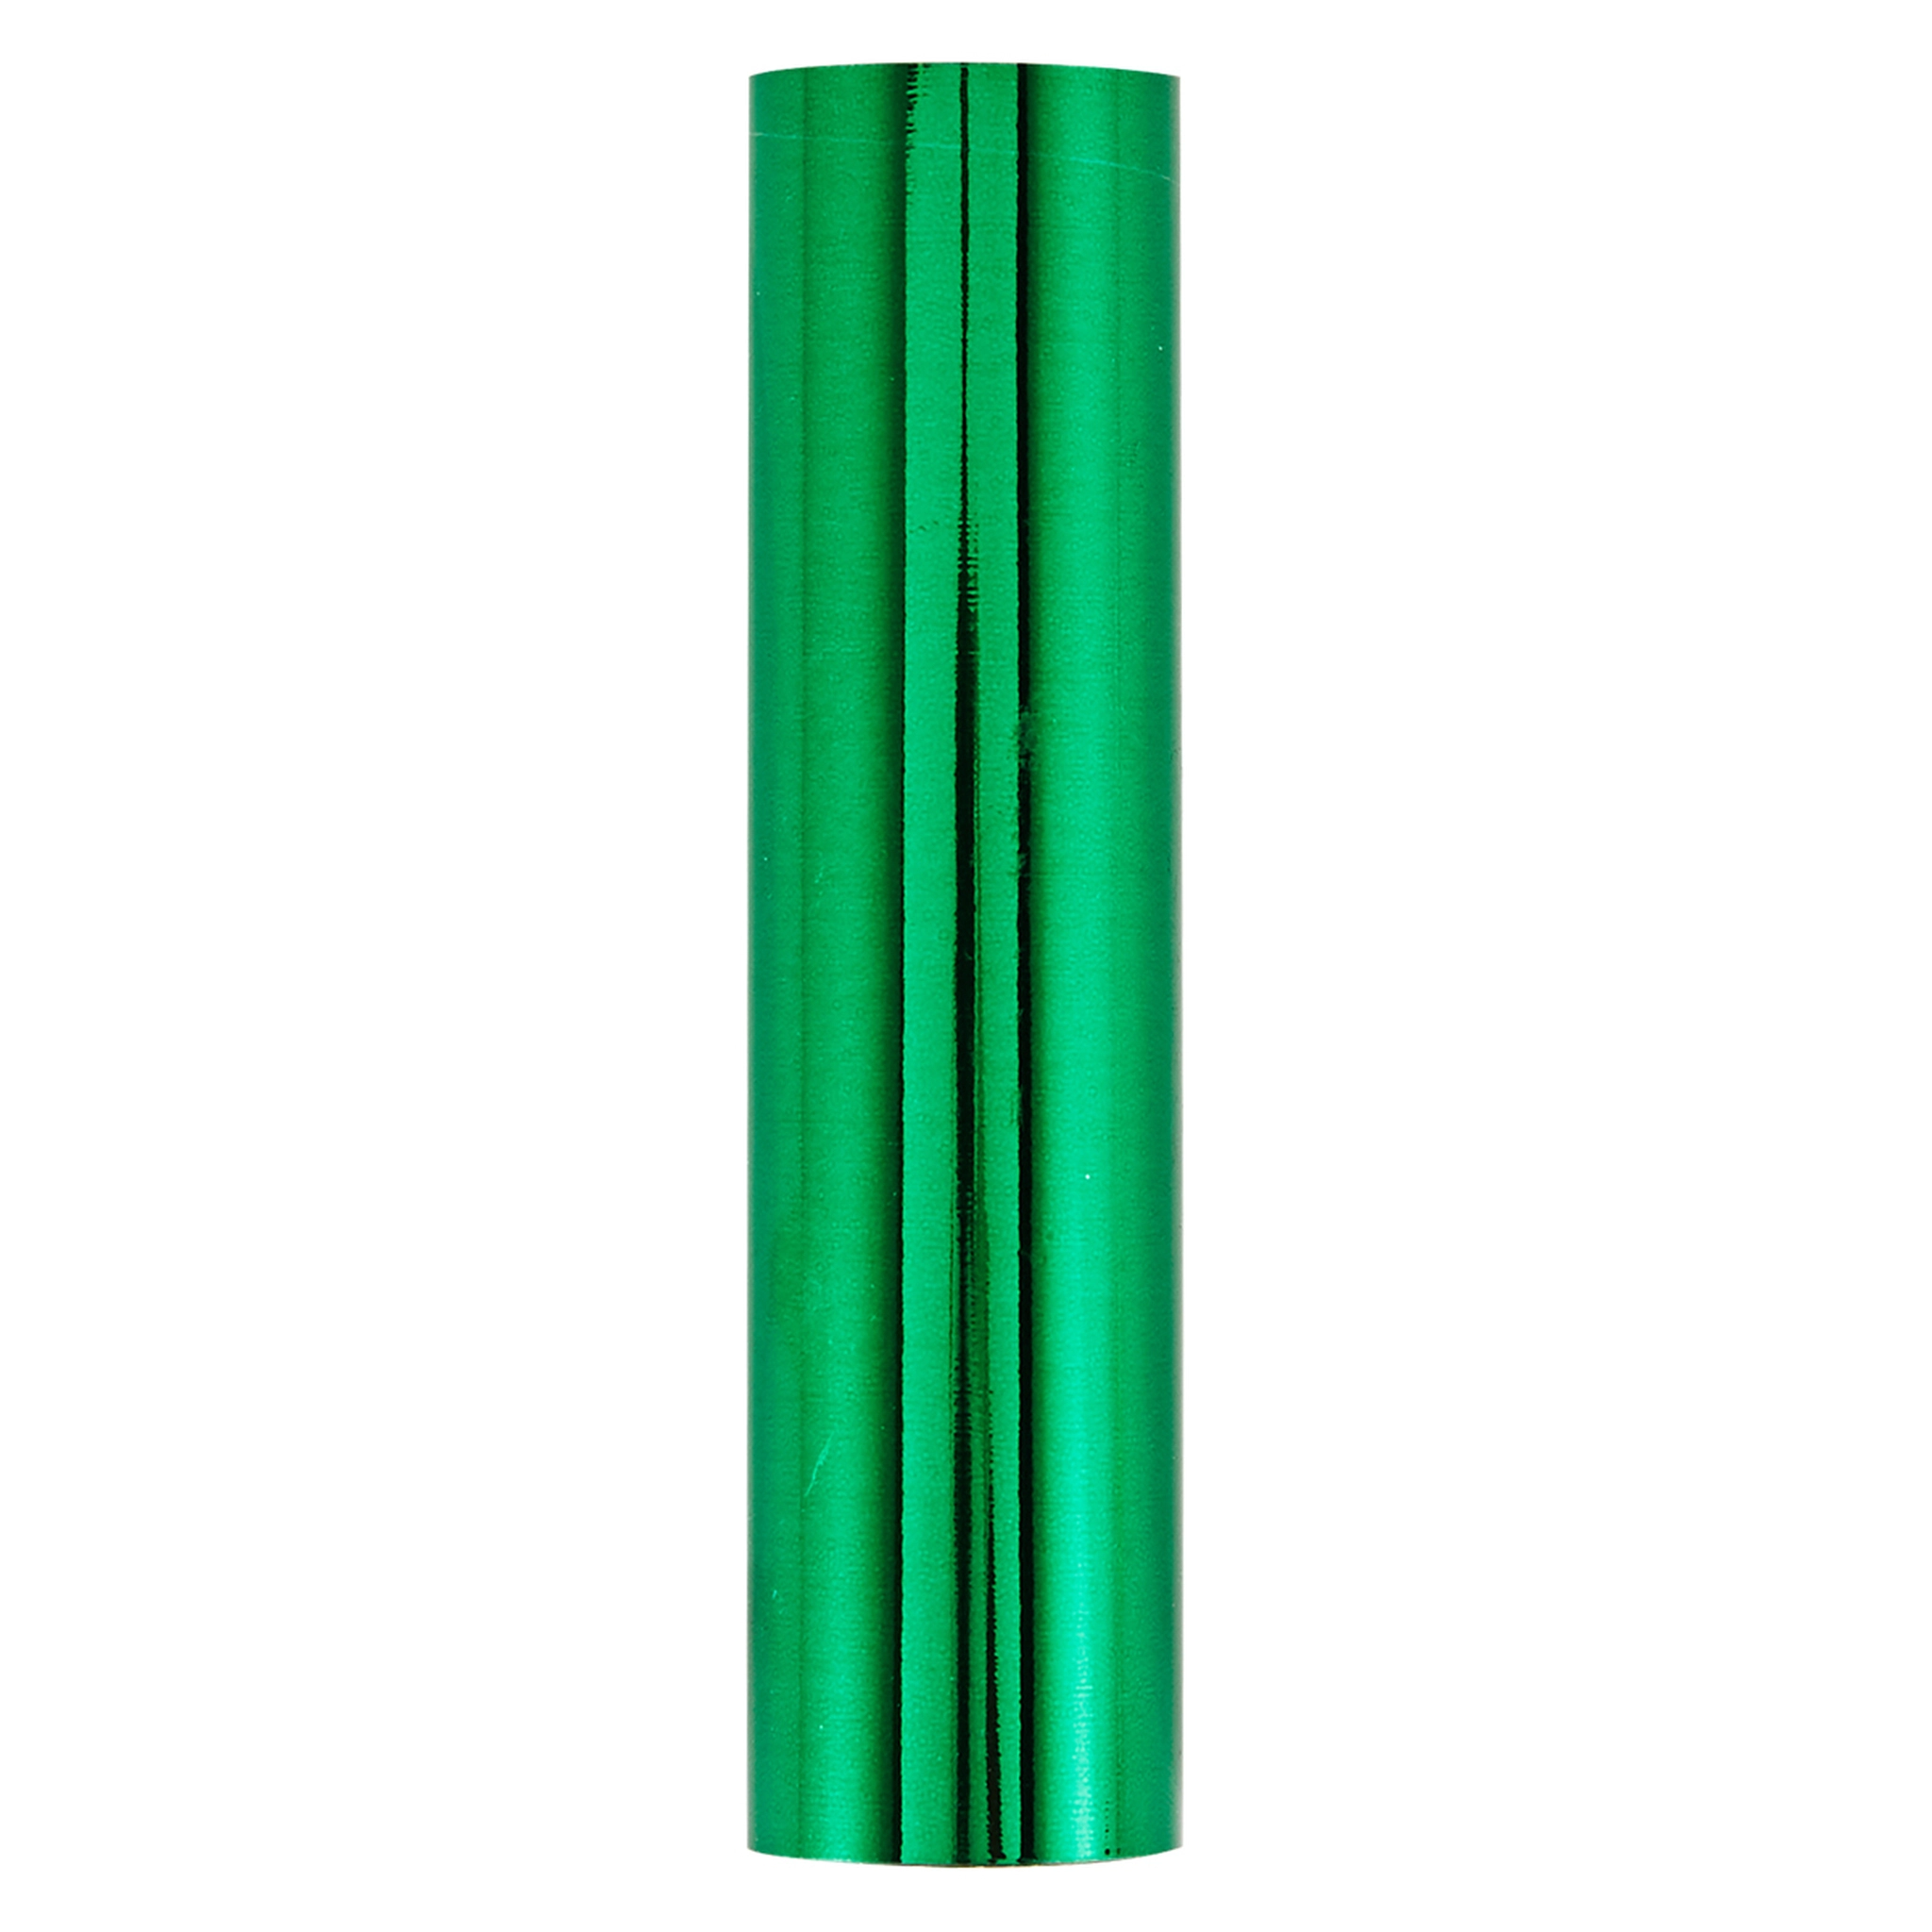 Spellbinders Glimmer Hot Foil Roll - Viridian Green - Folie